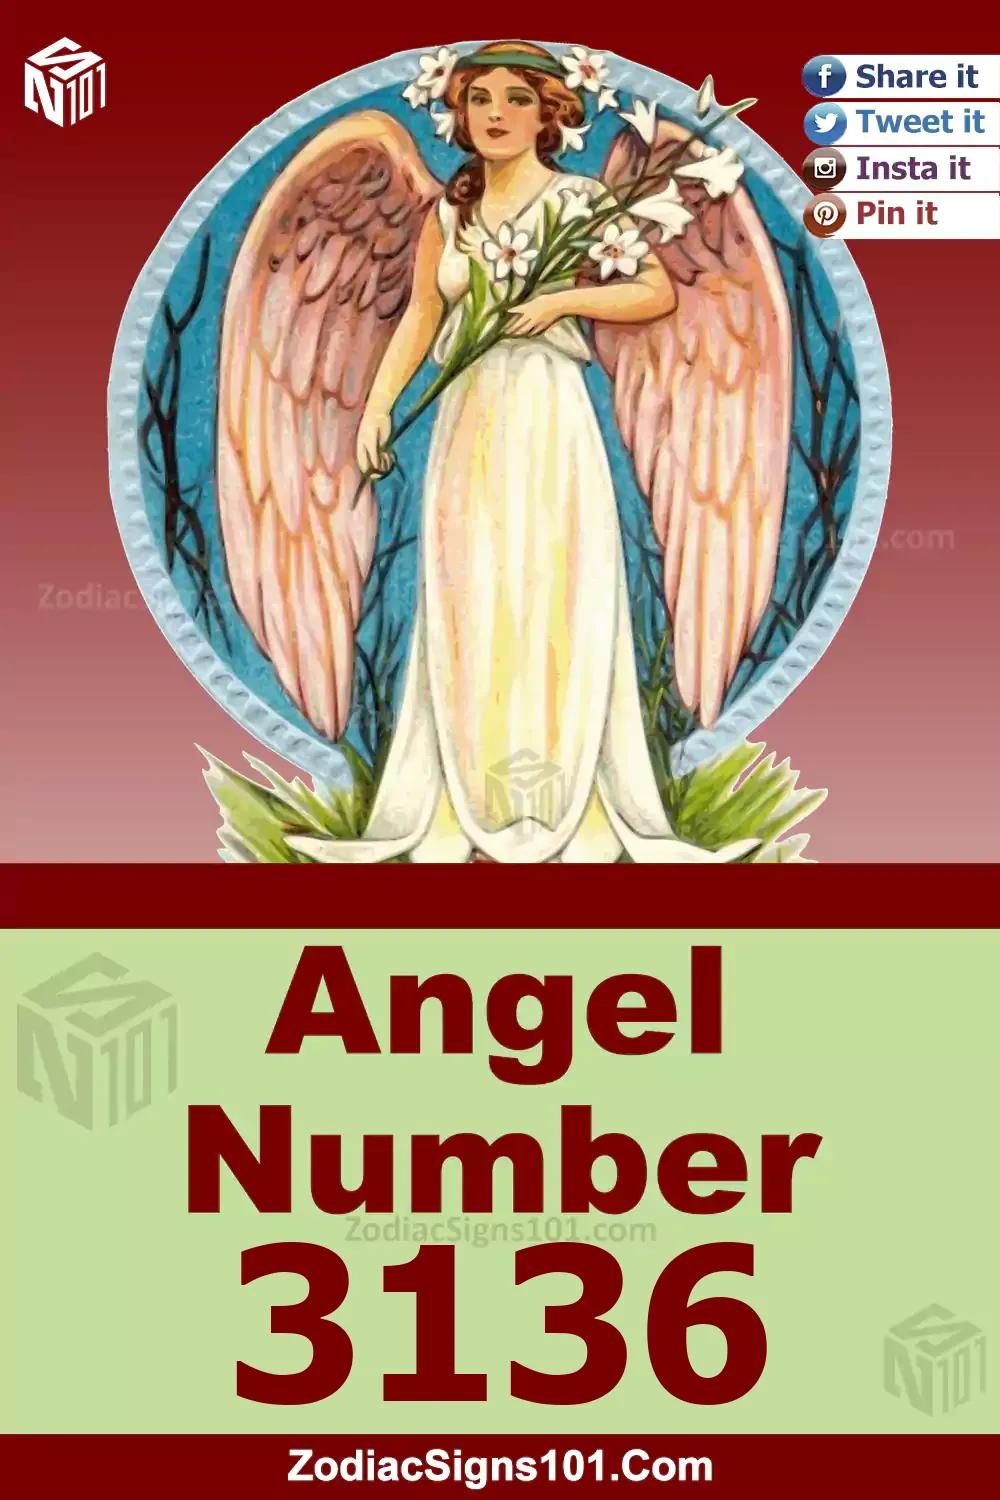 3136-Angel-Number-Meaning.jpg